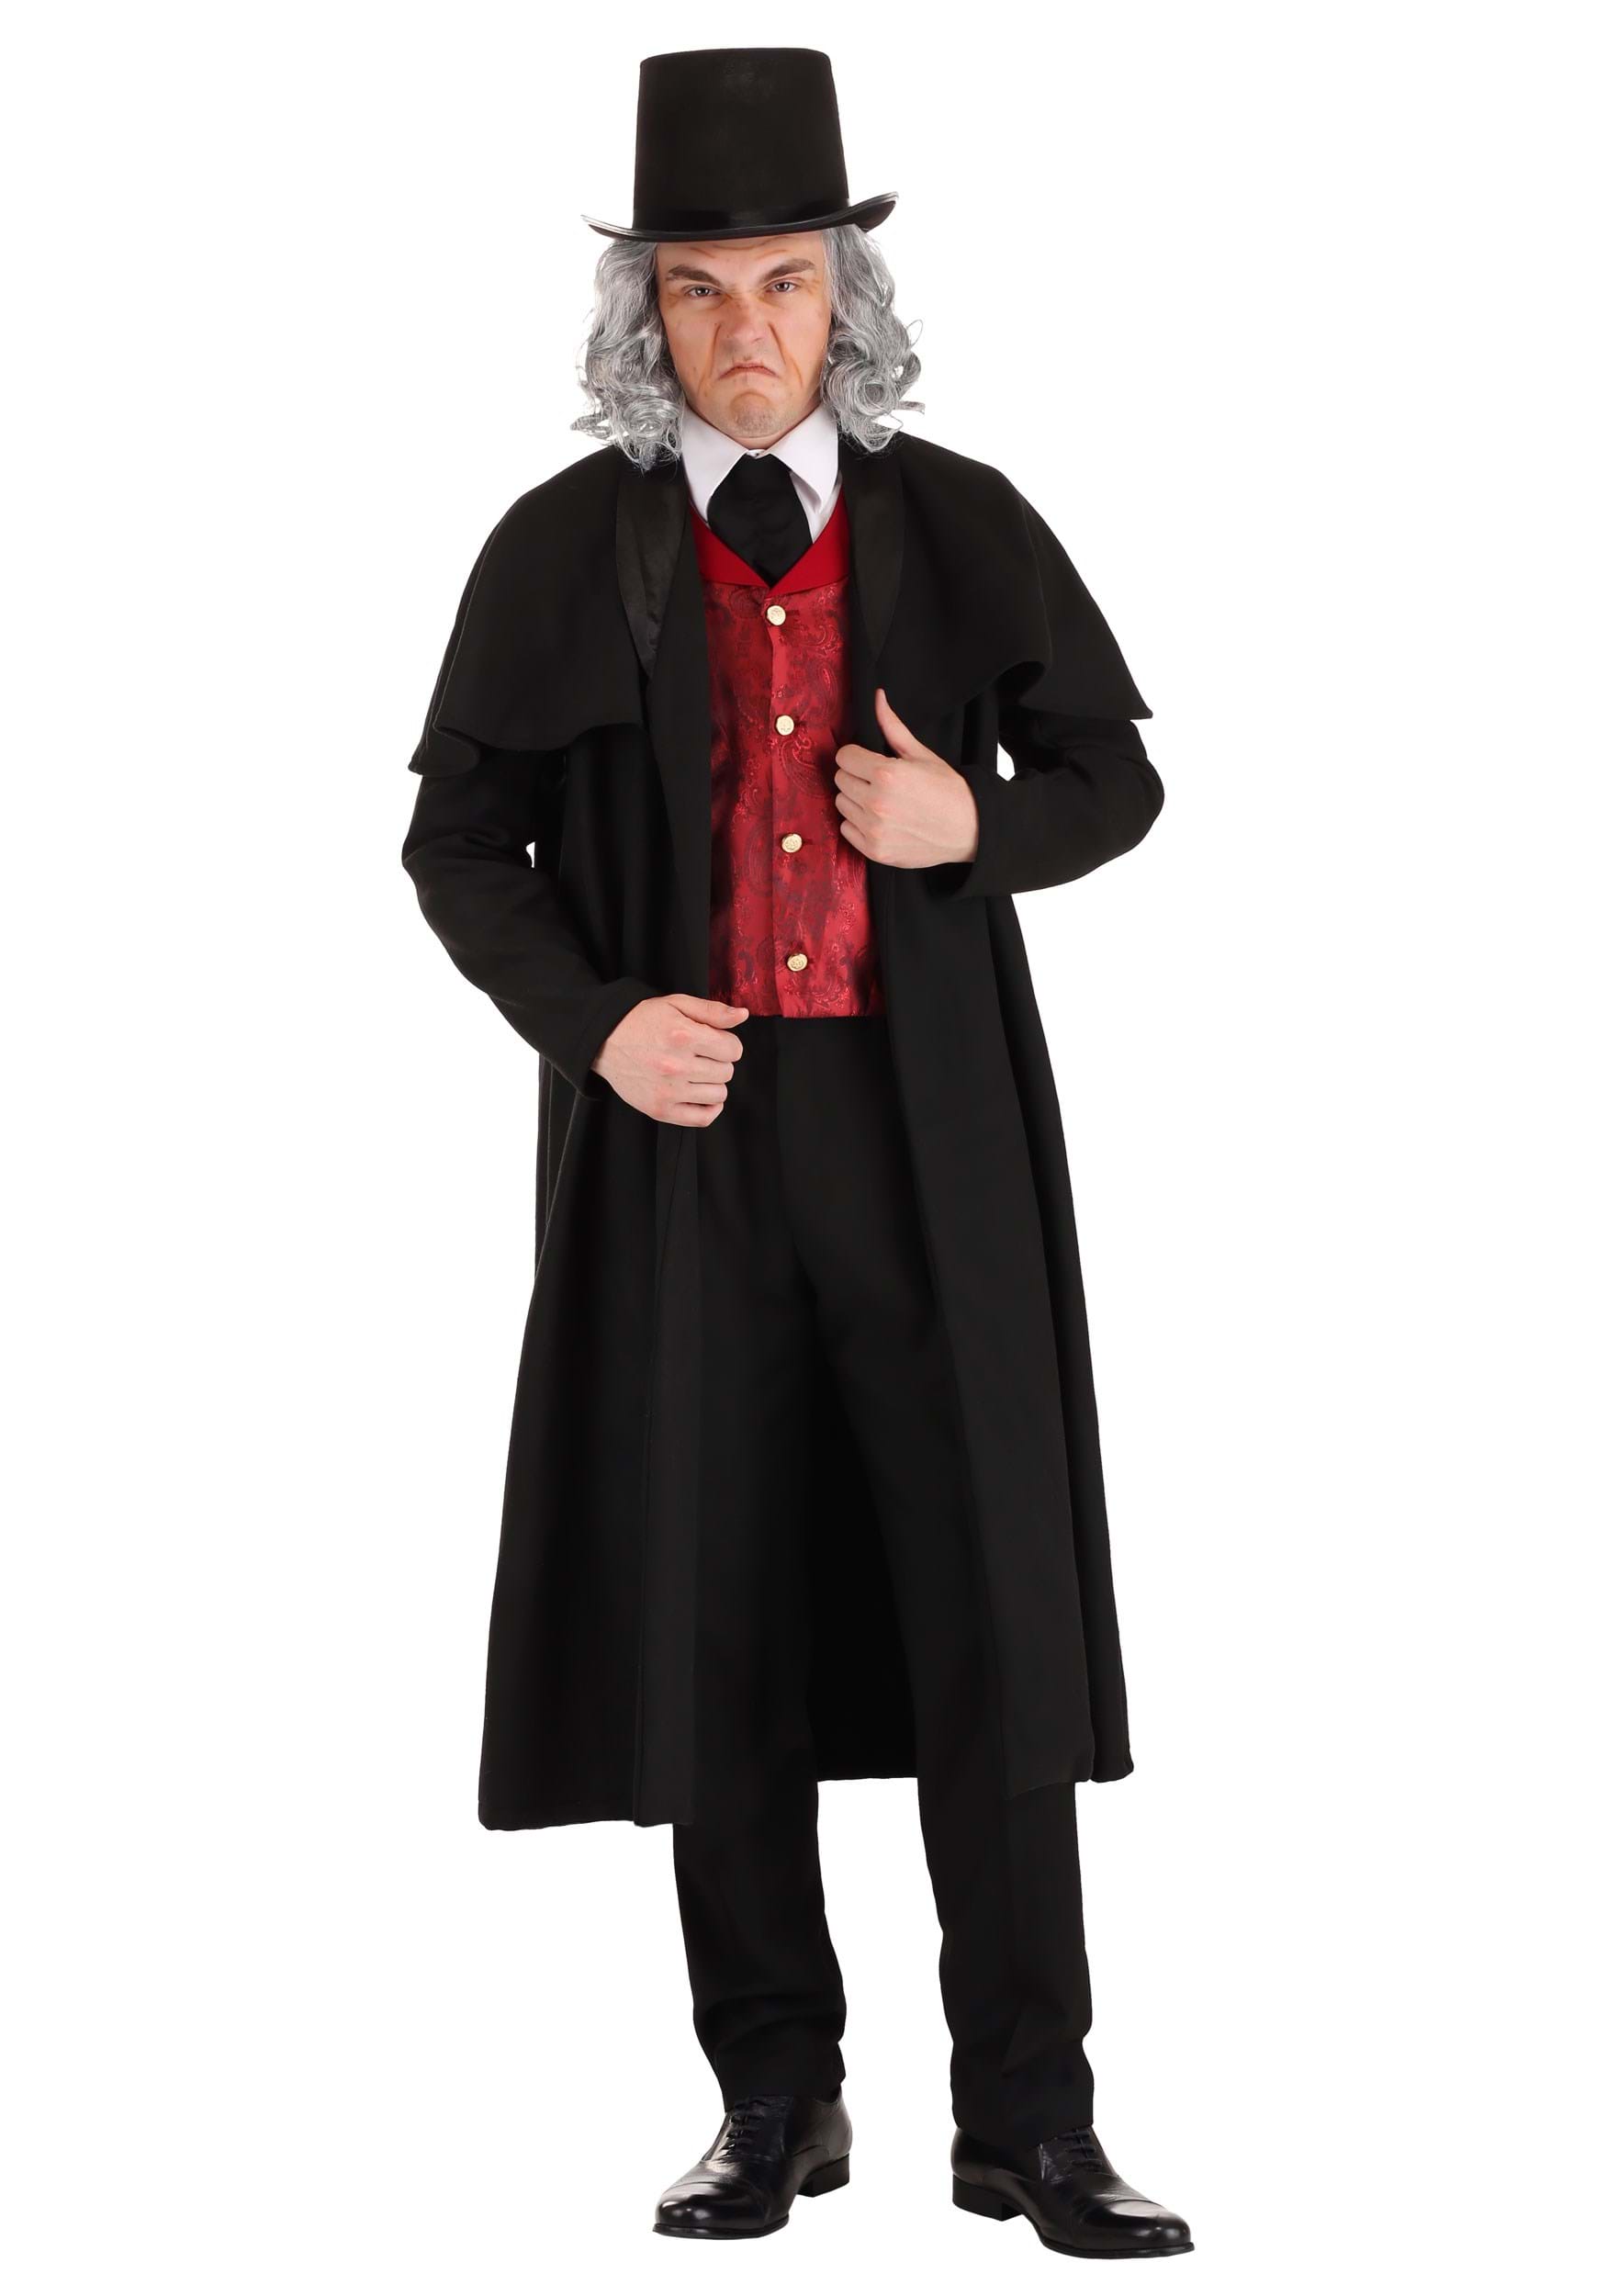 Photos - Fancy Dress FUN Costumes Old Ebenezer Scrooge Costume Black/Red FUN1365AD